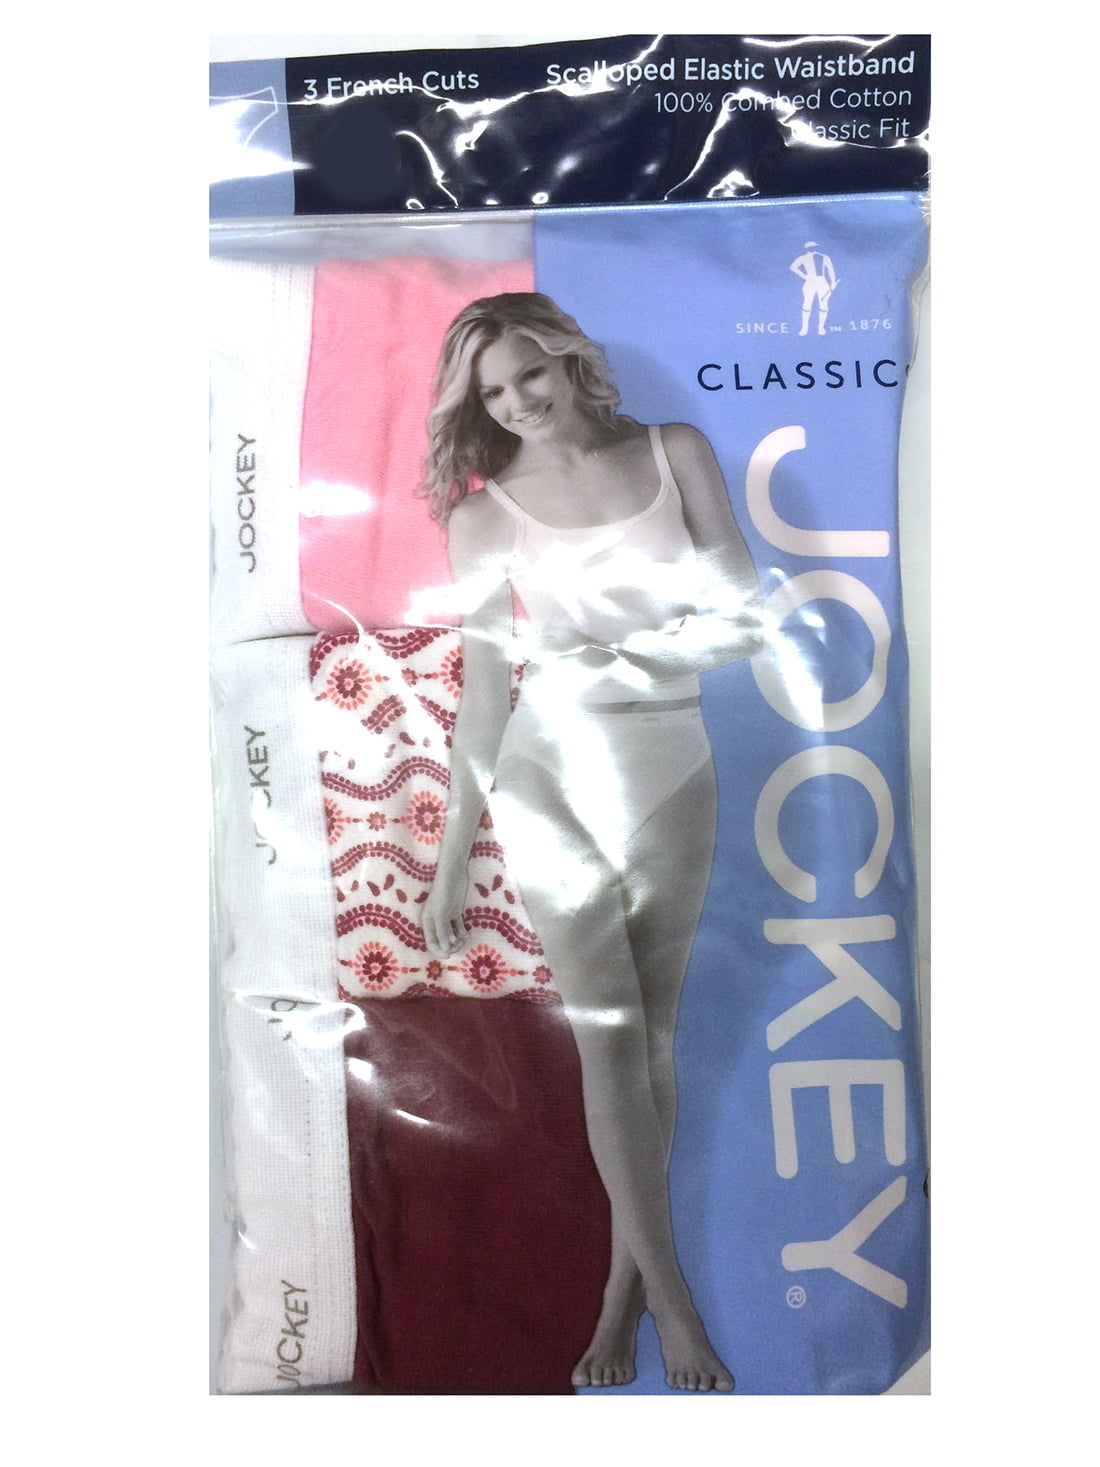 Jockey Women's Underwear Plus Size Classic French Cut - 3 Pack, Clear  Waters/Faded Medallion Pastel/Midnight Iris, 9 